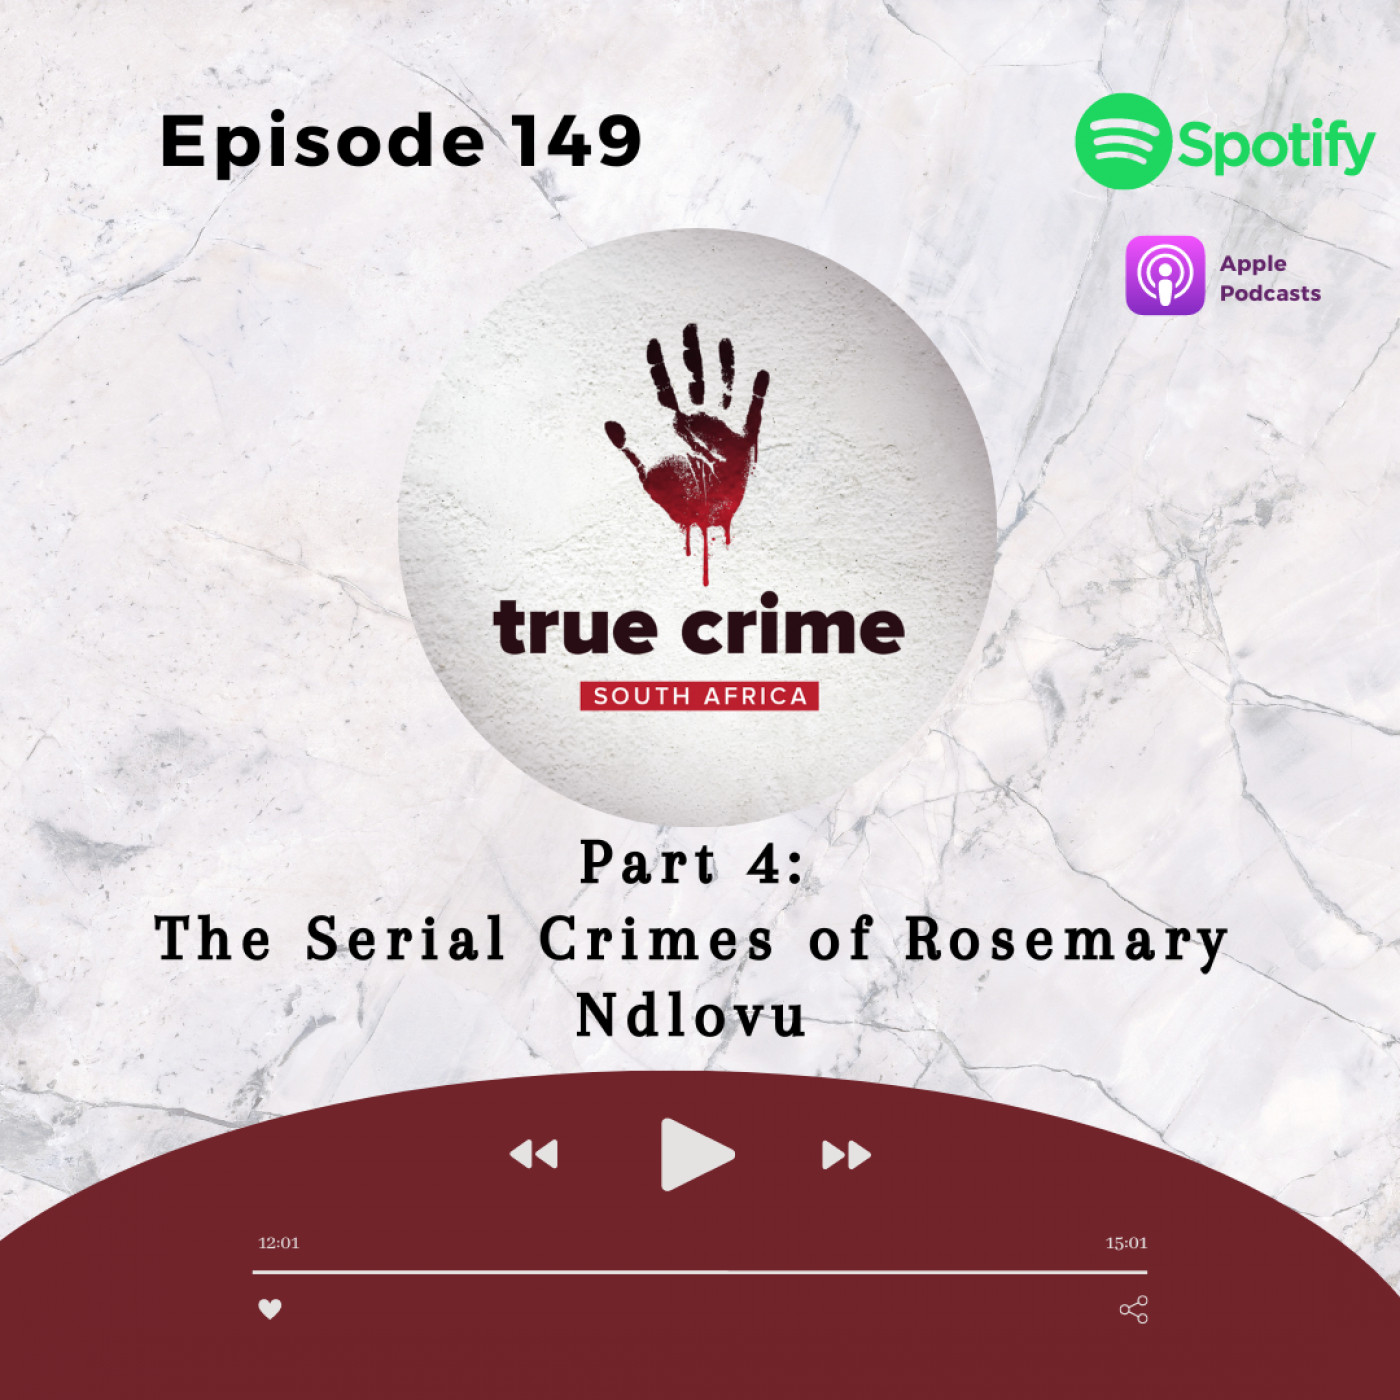 Episode 149 The Serial Crimes of Rosemary Ndlovu Part 4